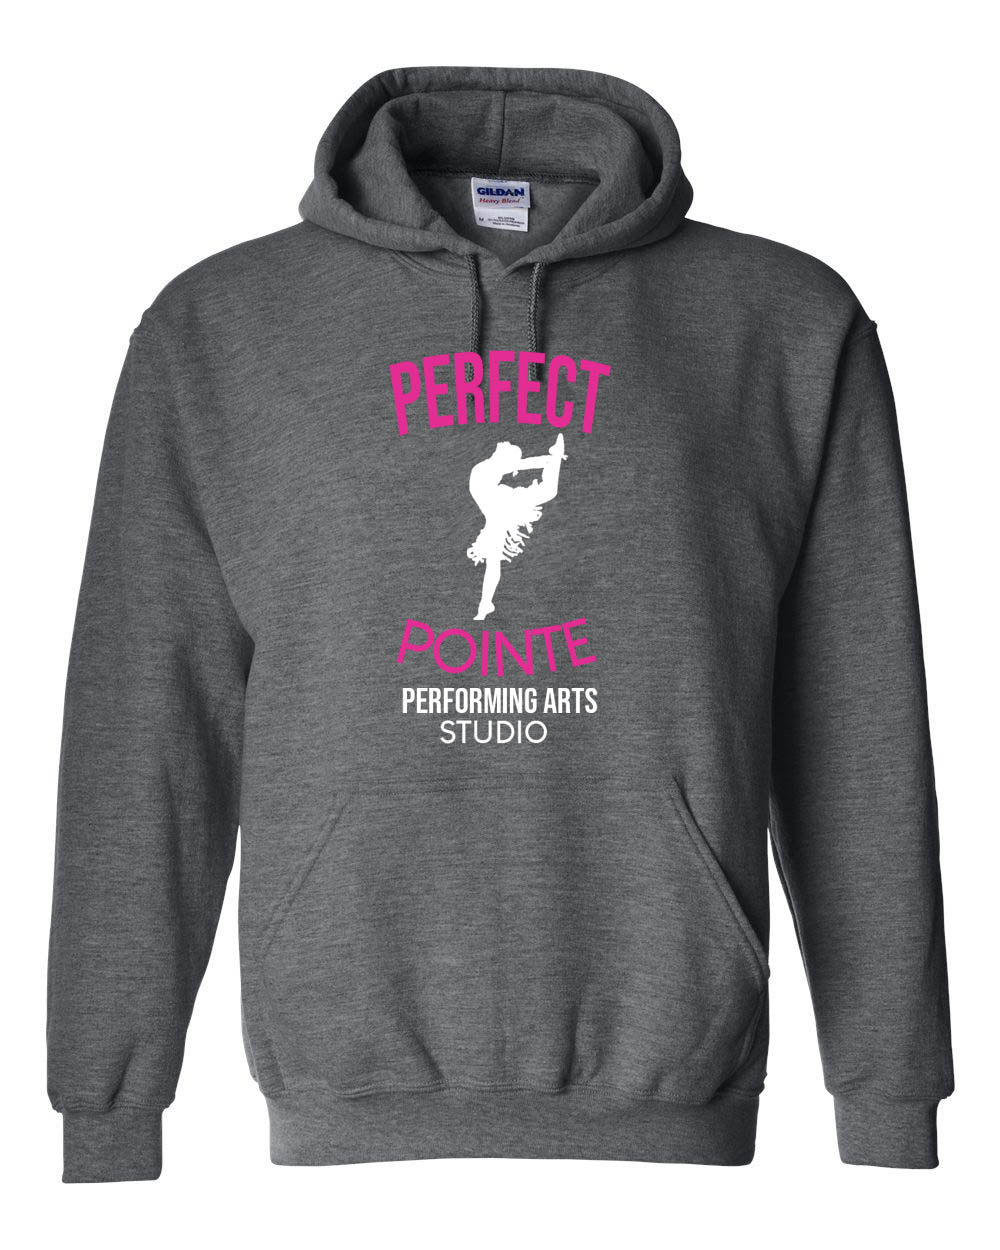 Perfect Pointe Design 8 Hooded Sweatshirt